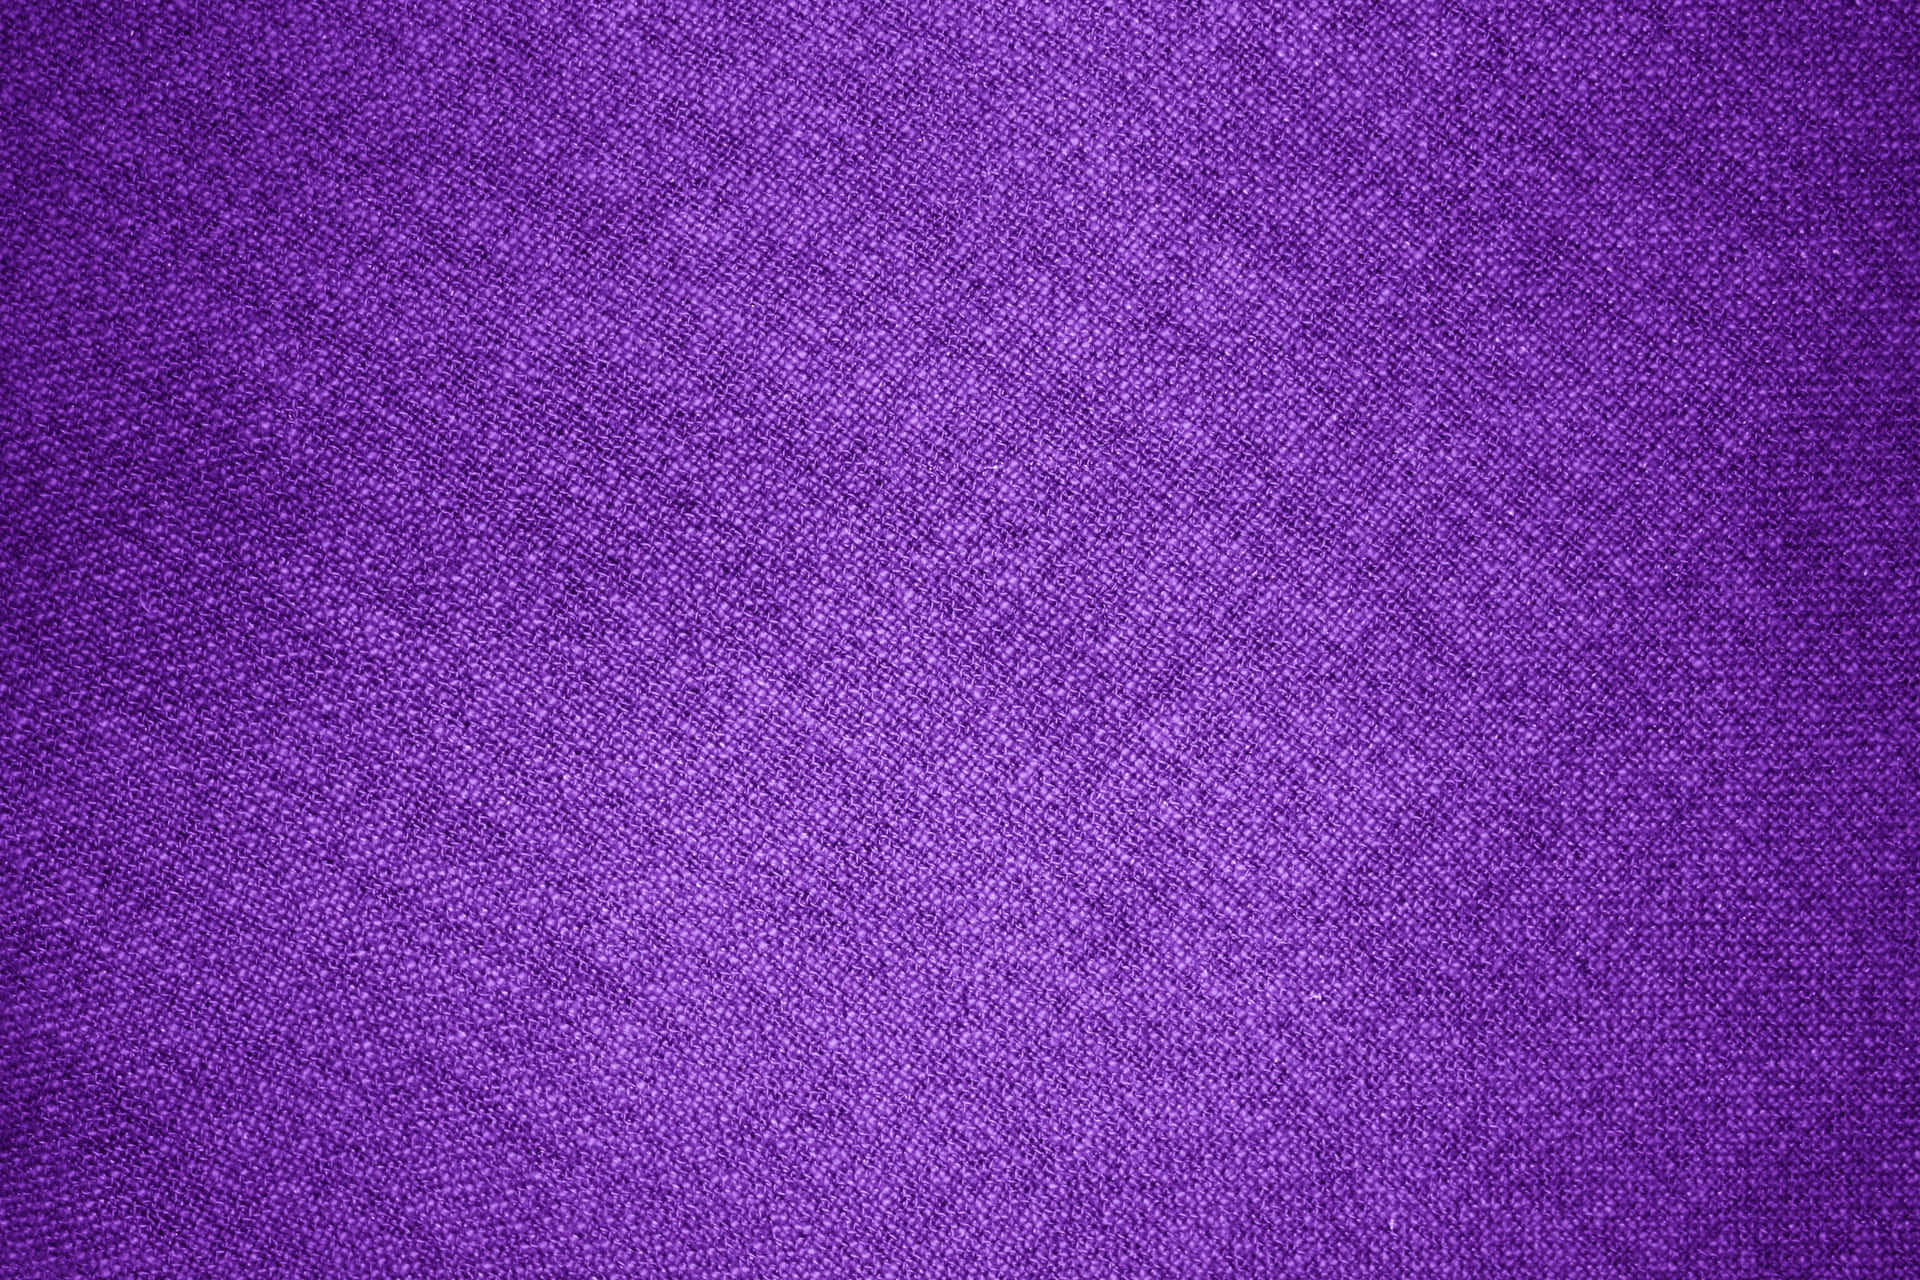 A bright, vibrant purple textured background.